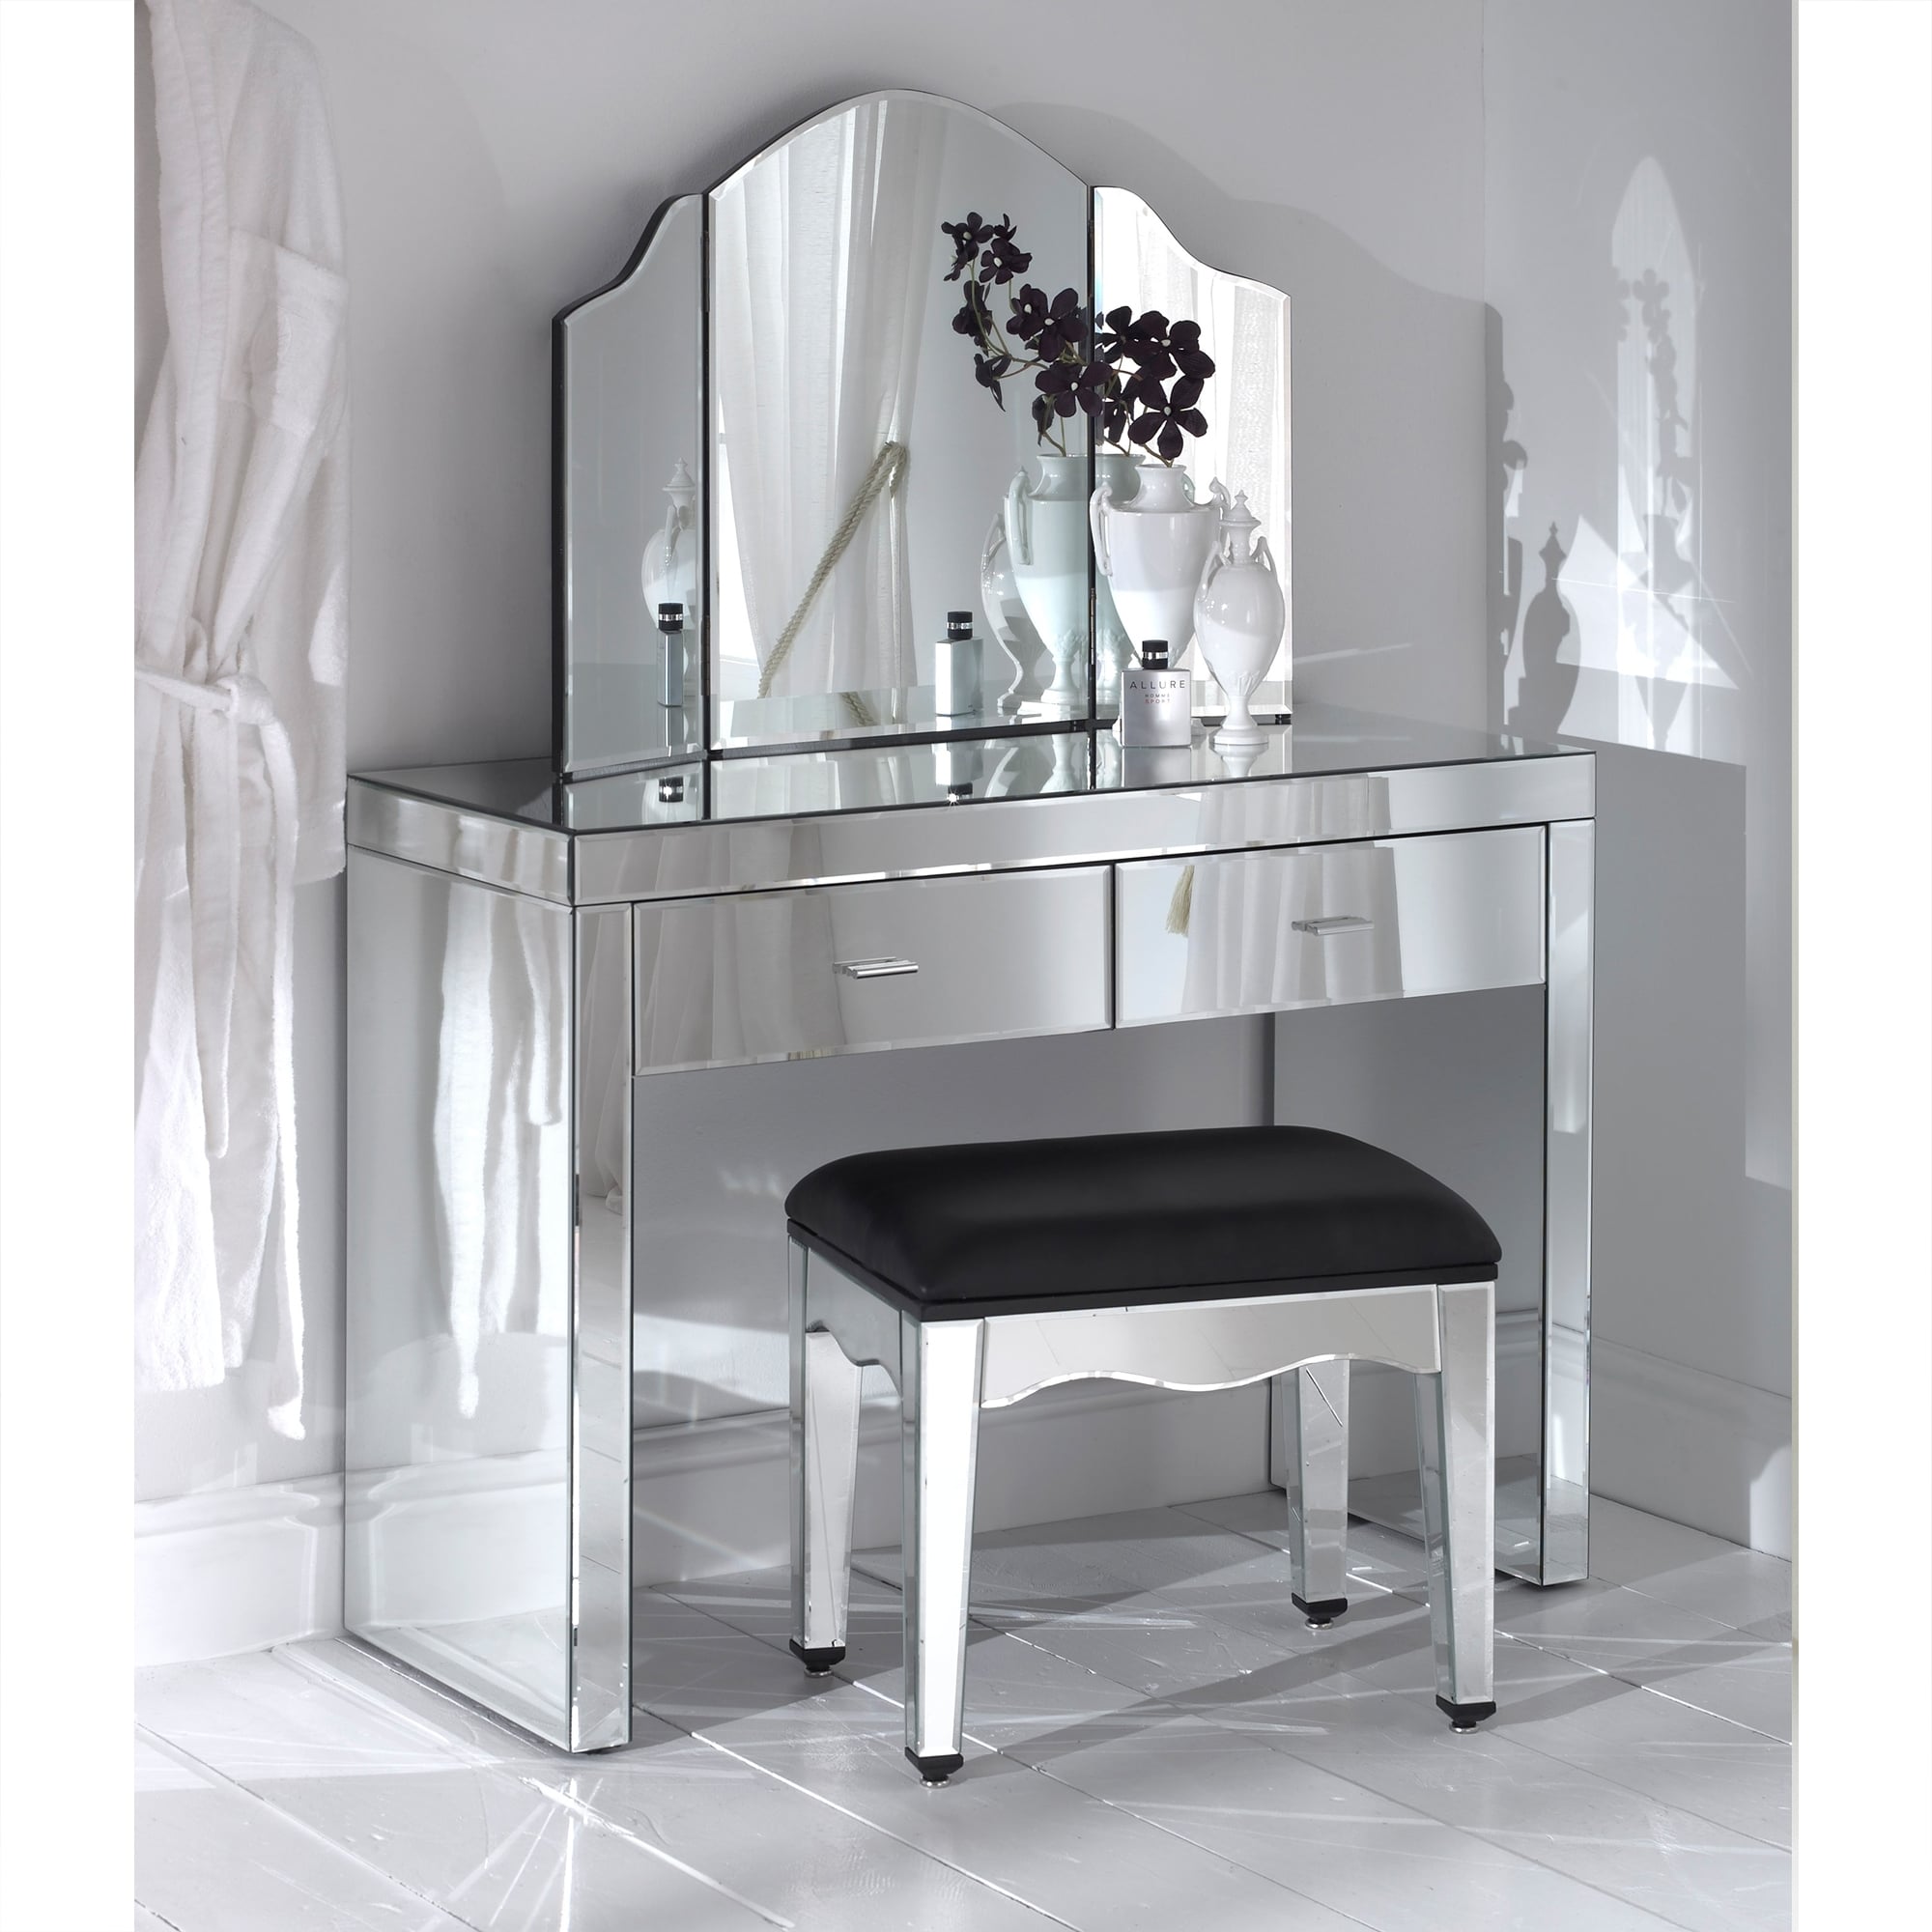 Mirrored Dressing Table romano mirrored dressing table set VIJJDOK